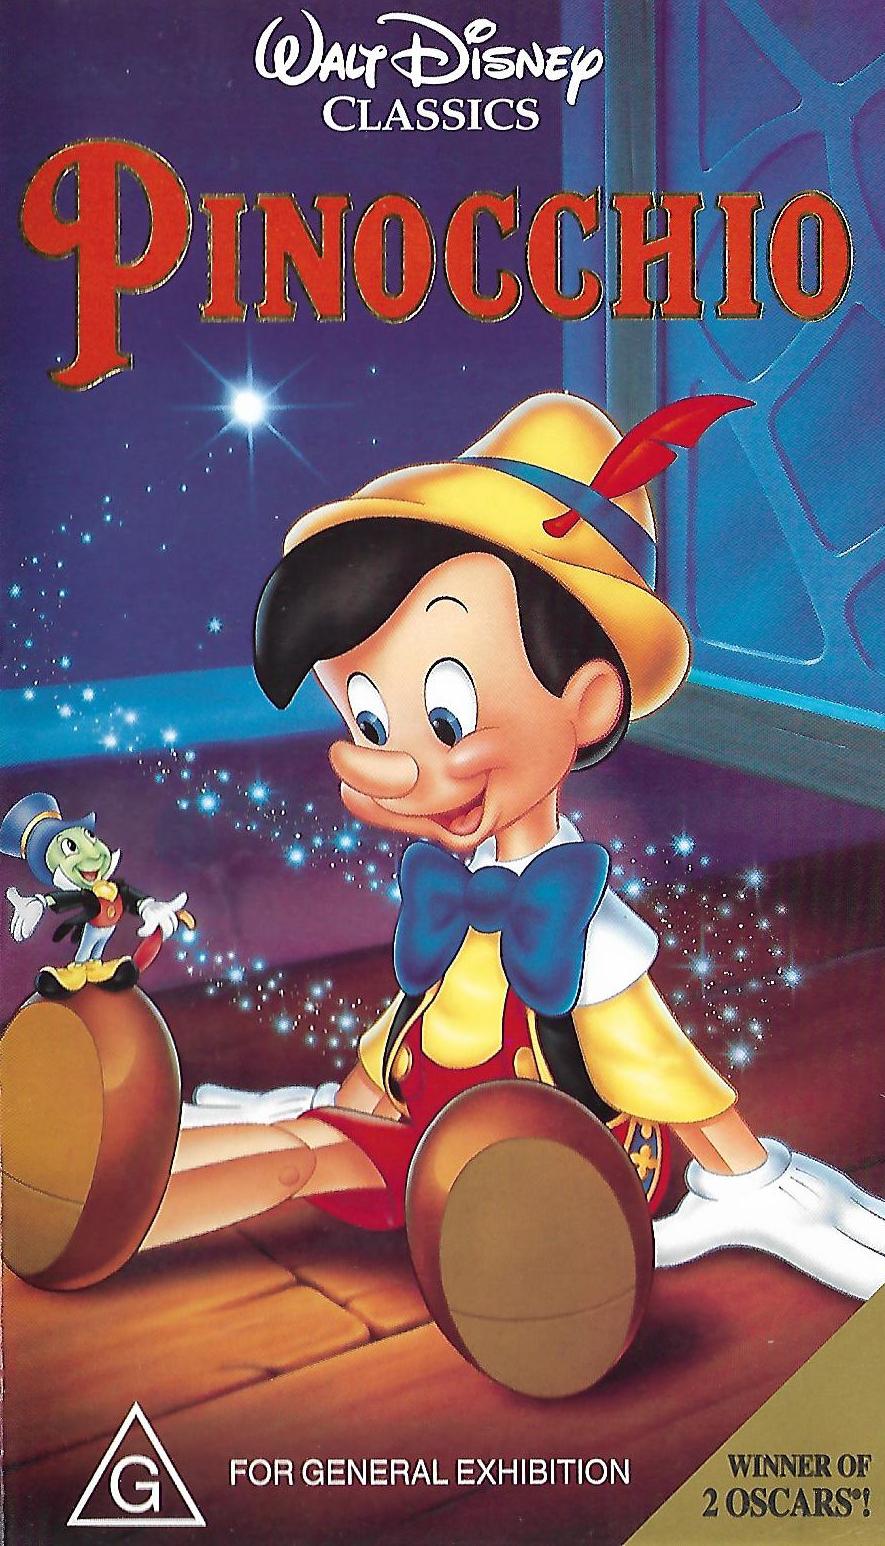 80th anniversary of Pinocchio 2020 Disney vhs openings Wiki Fandom